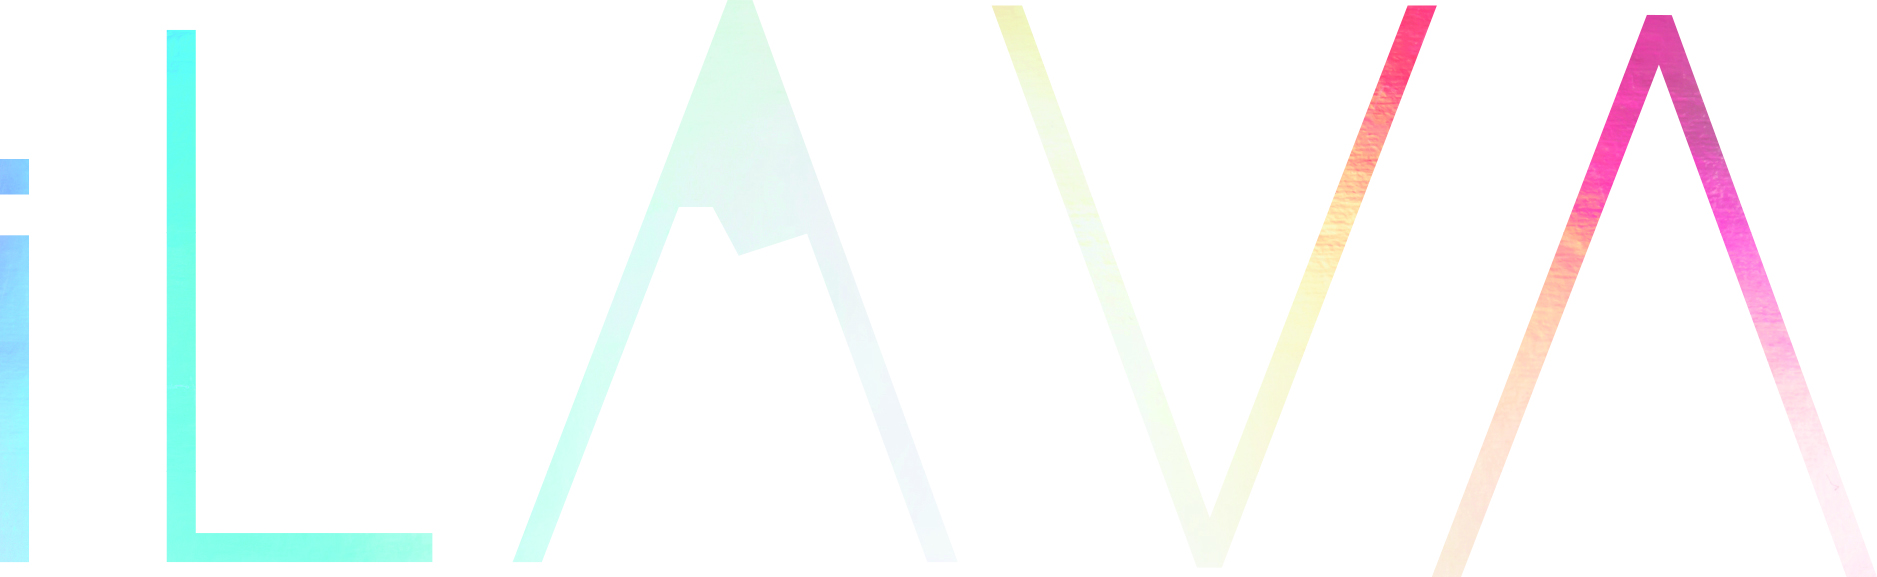 ilava-holographic-logo